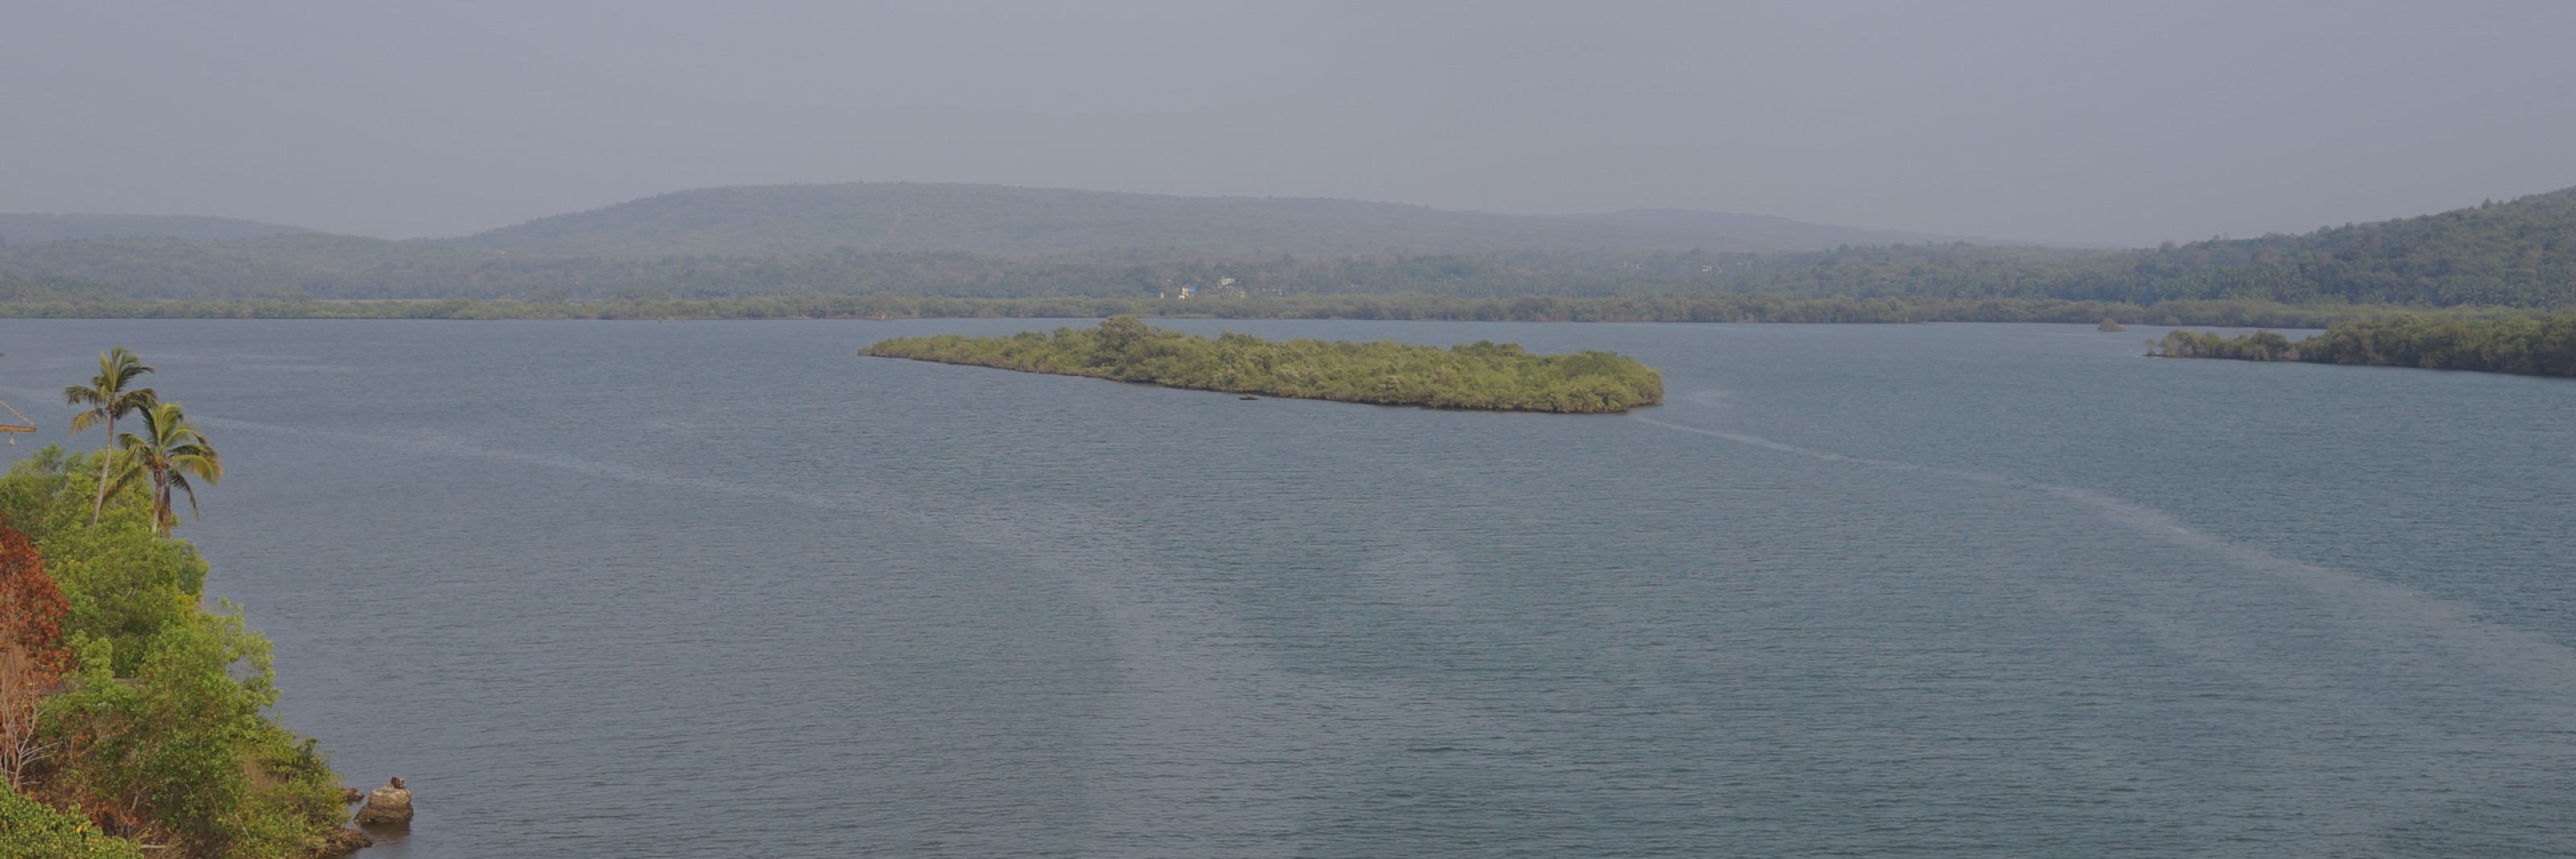 View Of Goa